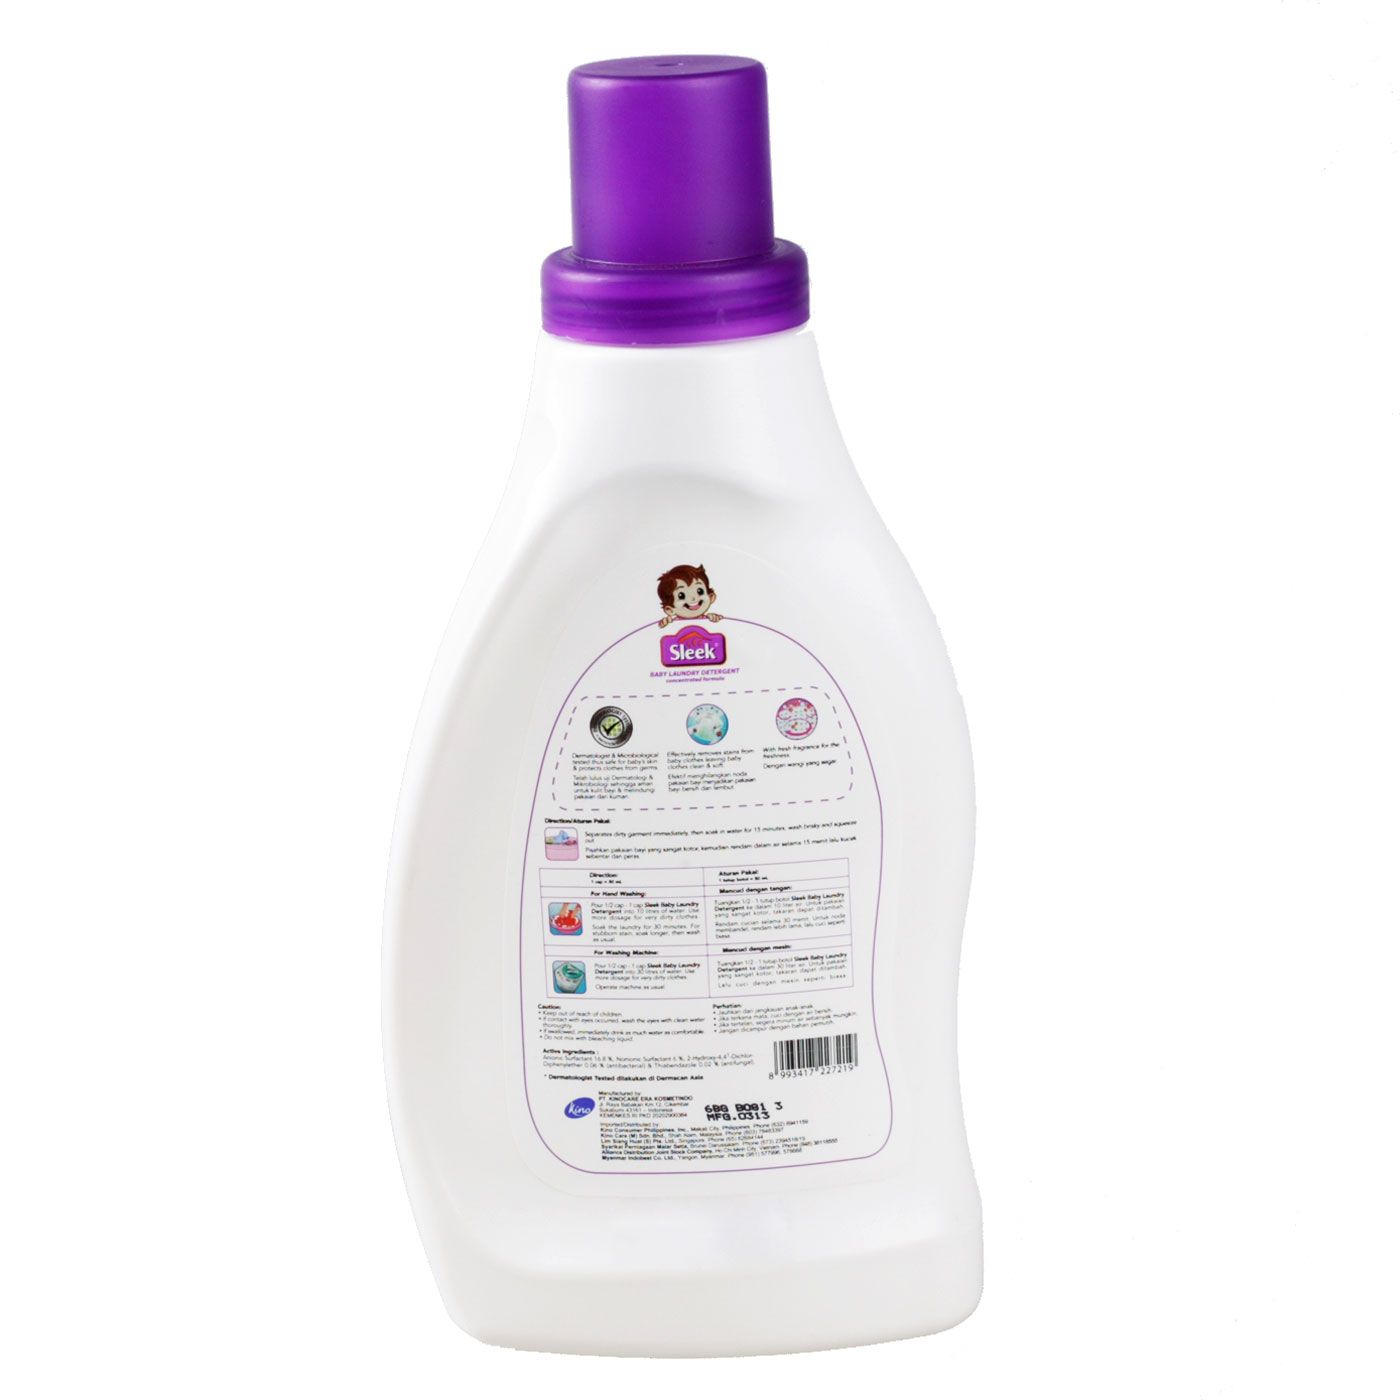 Sleek Baby Laundry Detergent Bottle 500ml - 2